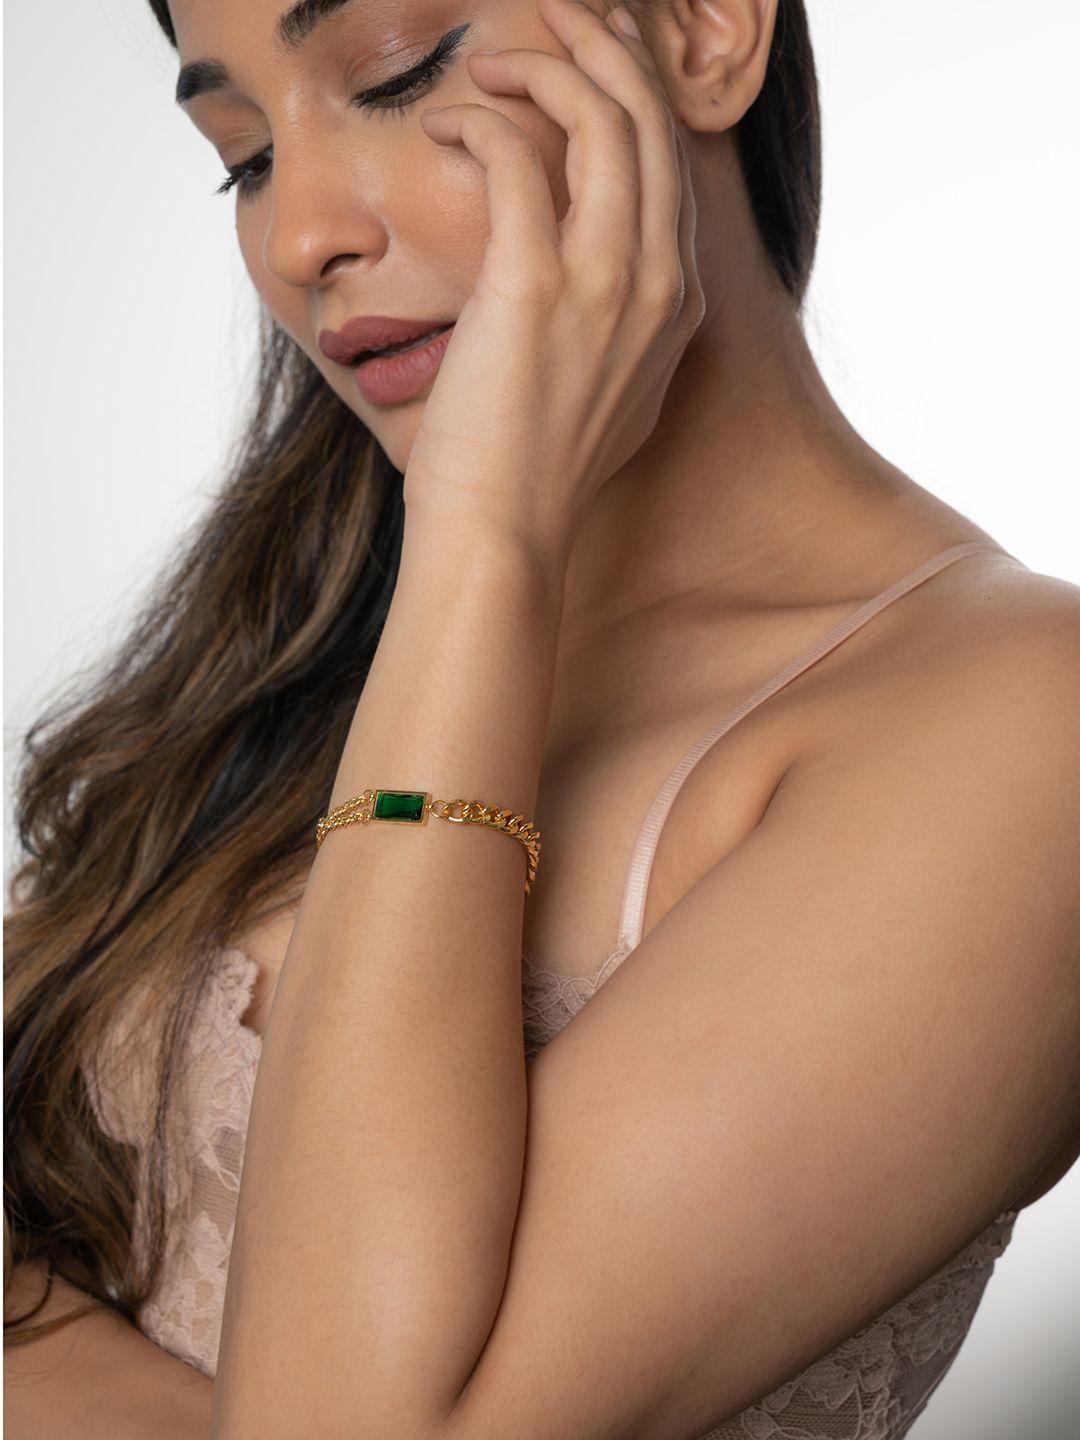 white lies women gold-plated & green charm bracelet